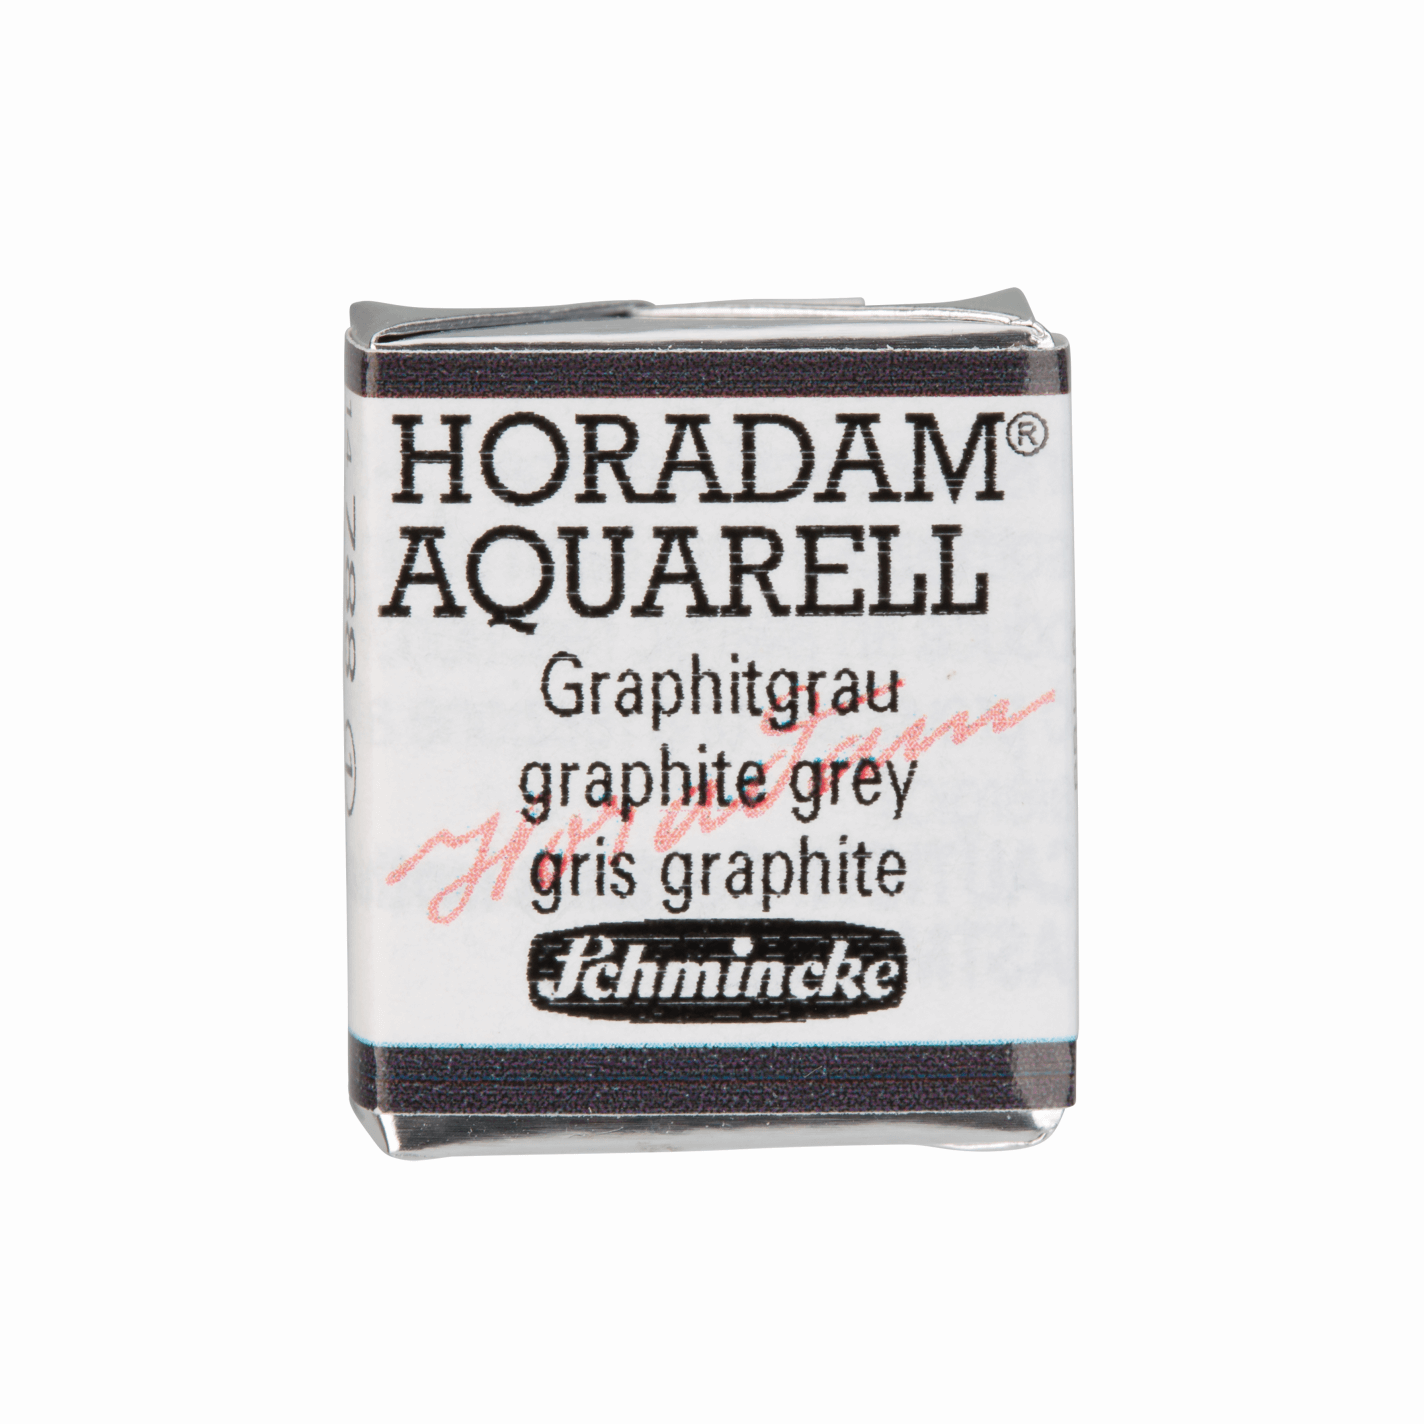 Schmincke Horadam Aquarell pans 1/2 pan Graphite Grey